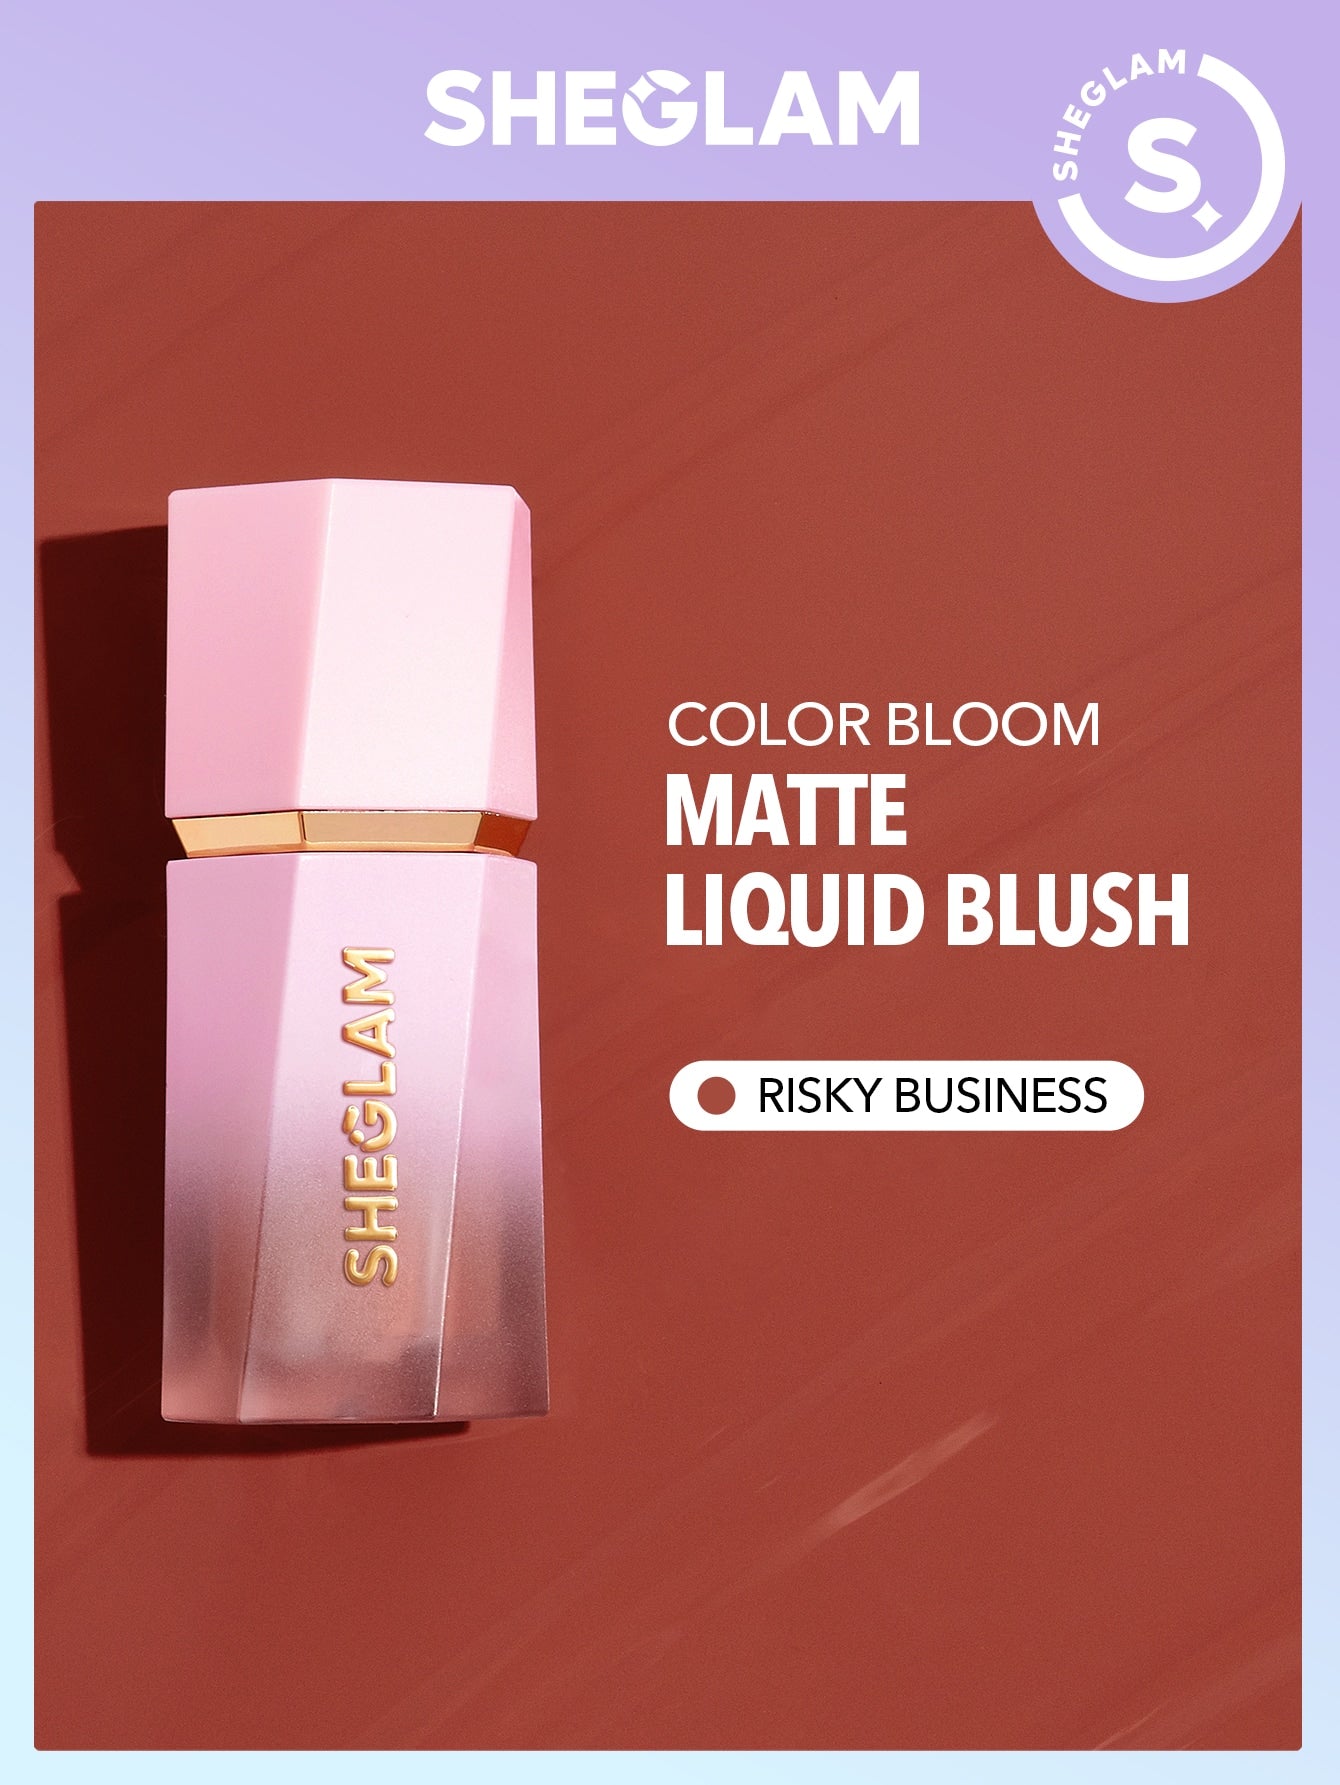 SHEGLAM Color Bloom Liquid Blush Matte Finish Float On